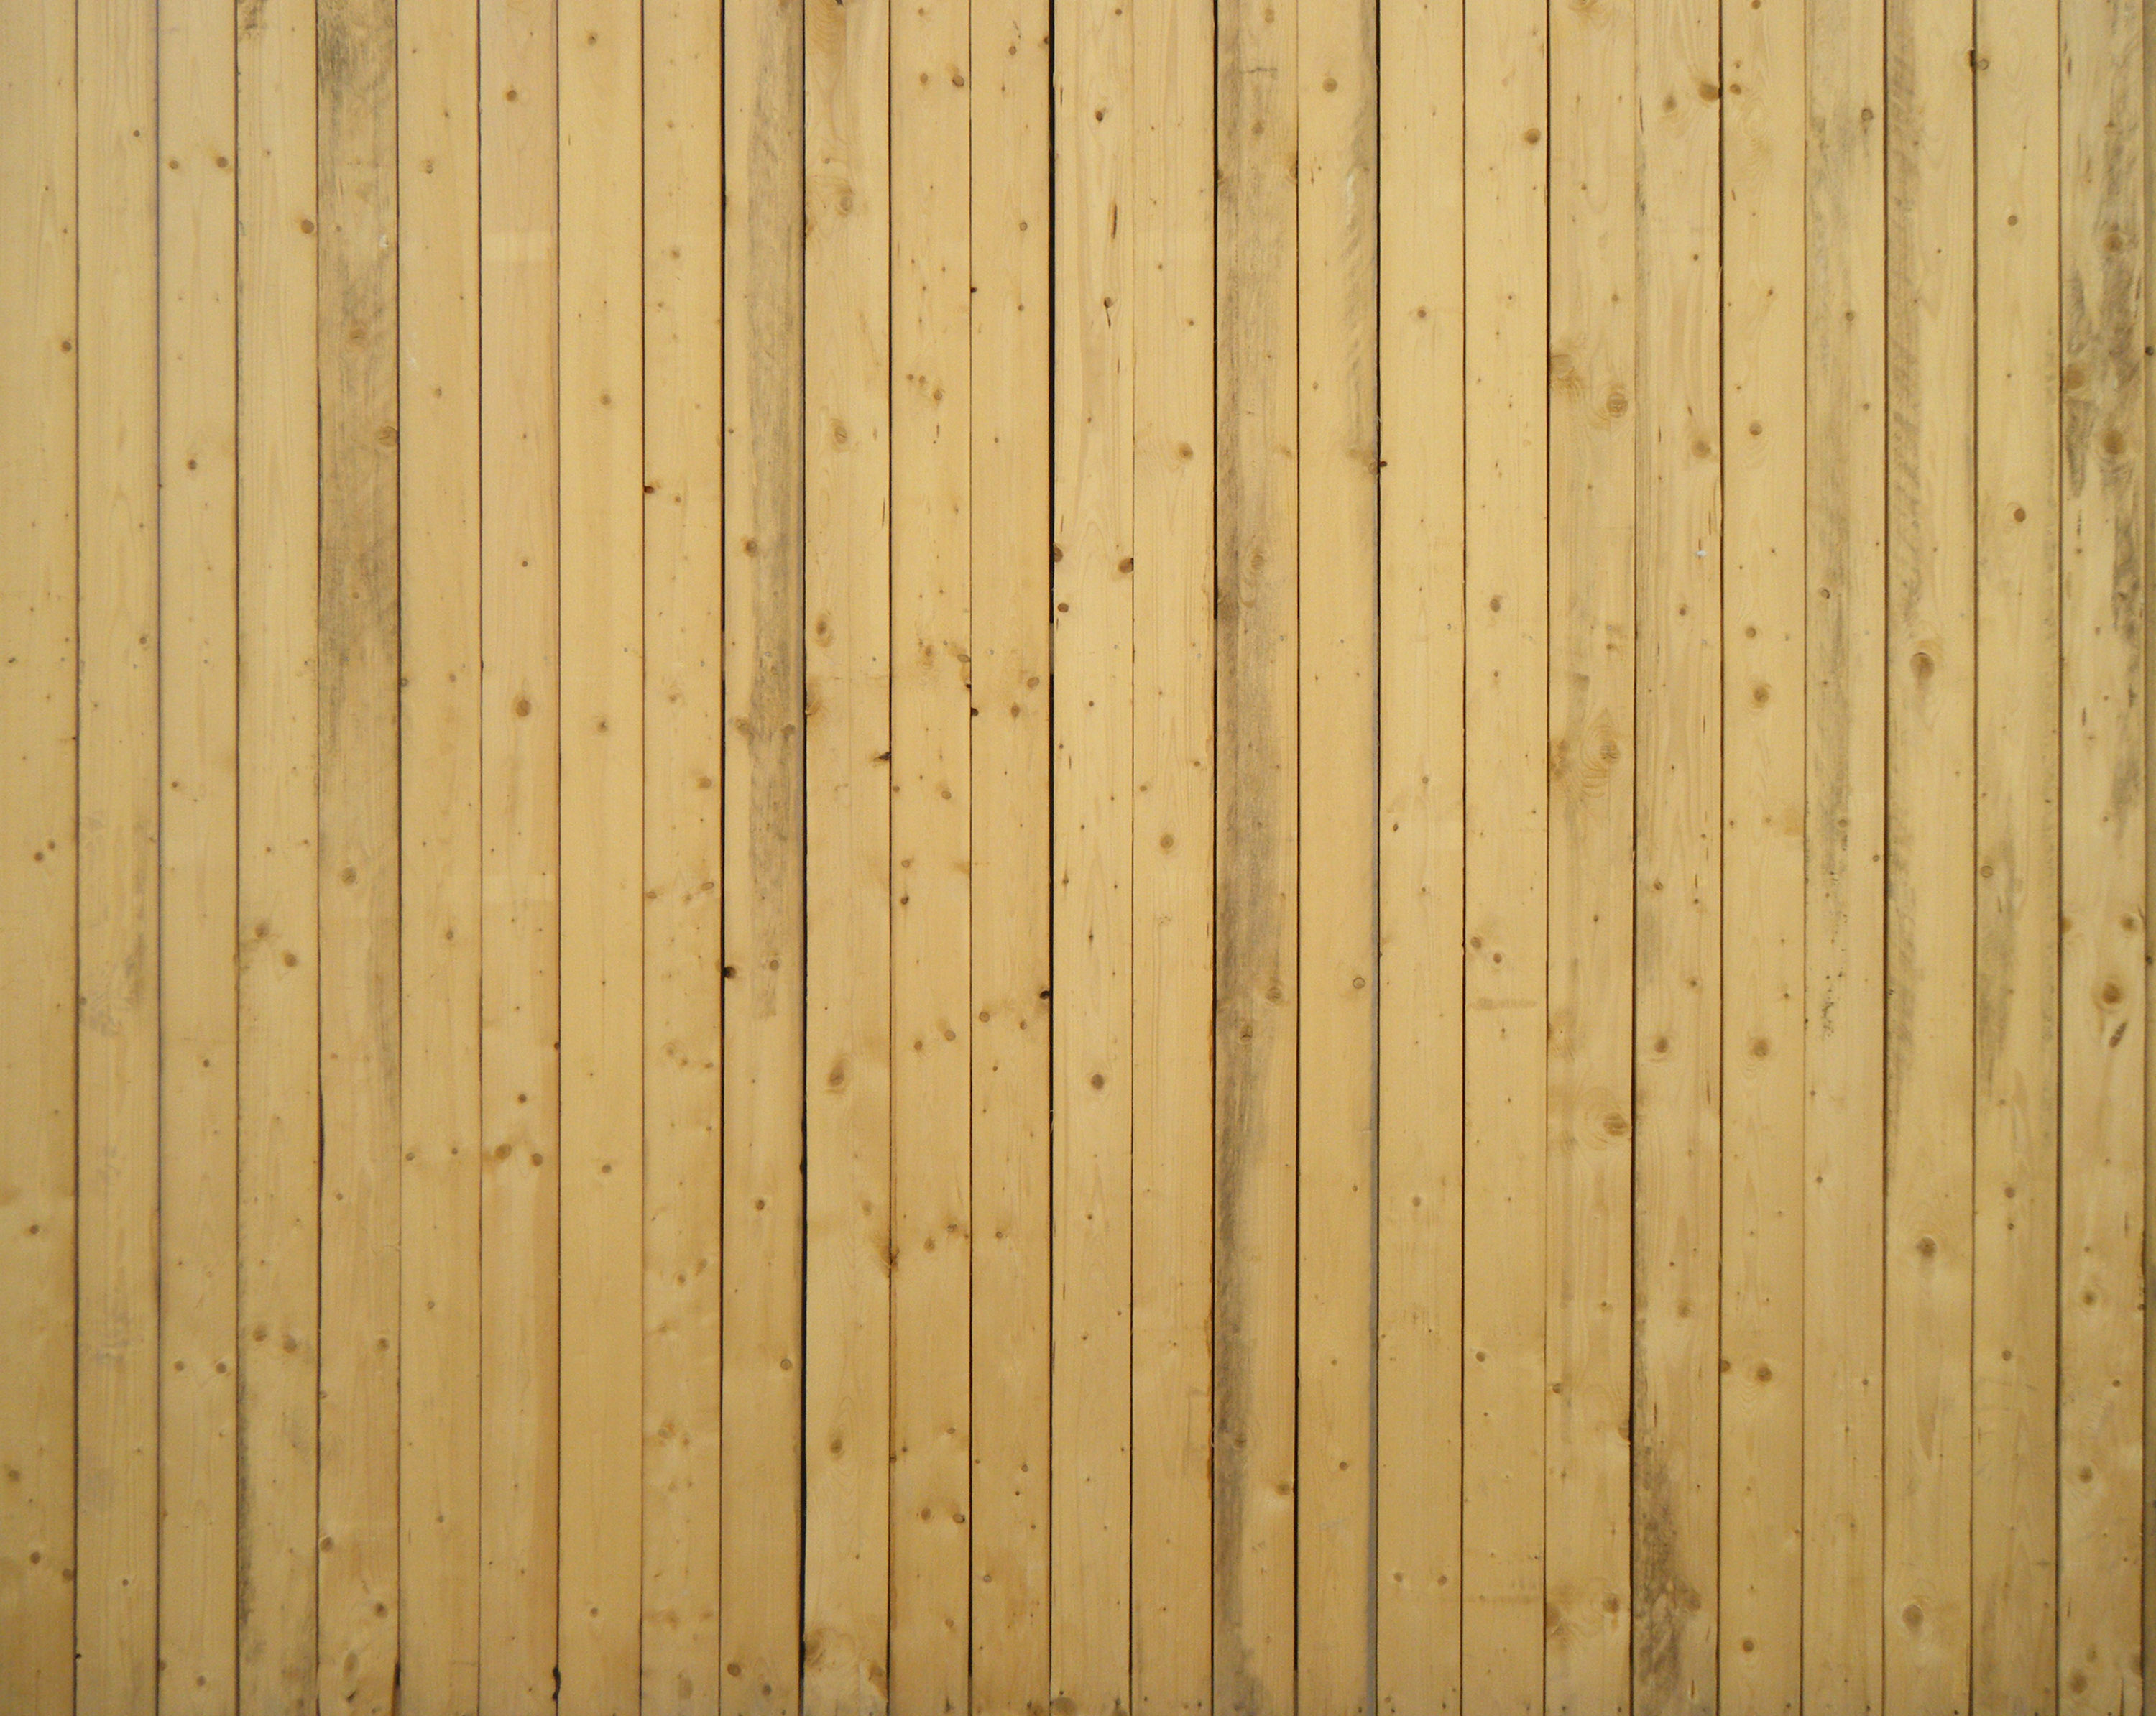 Yellow wood planks photo